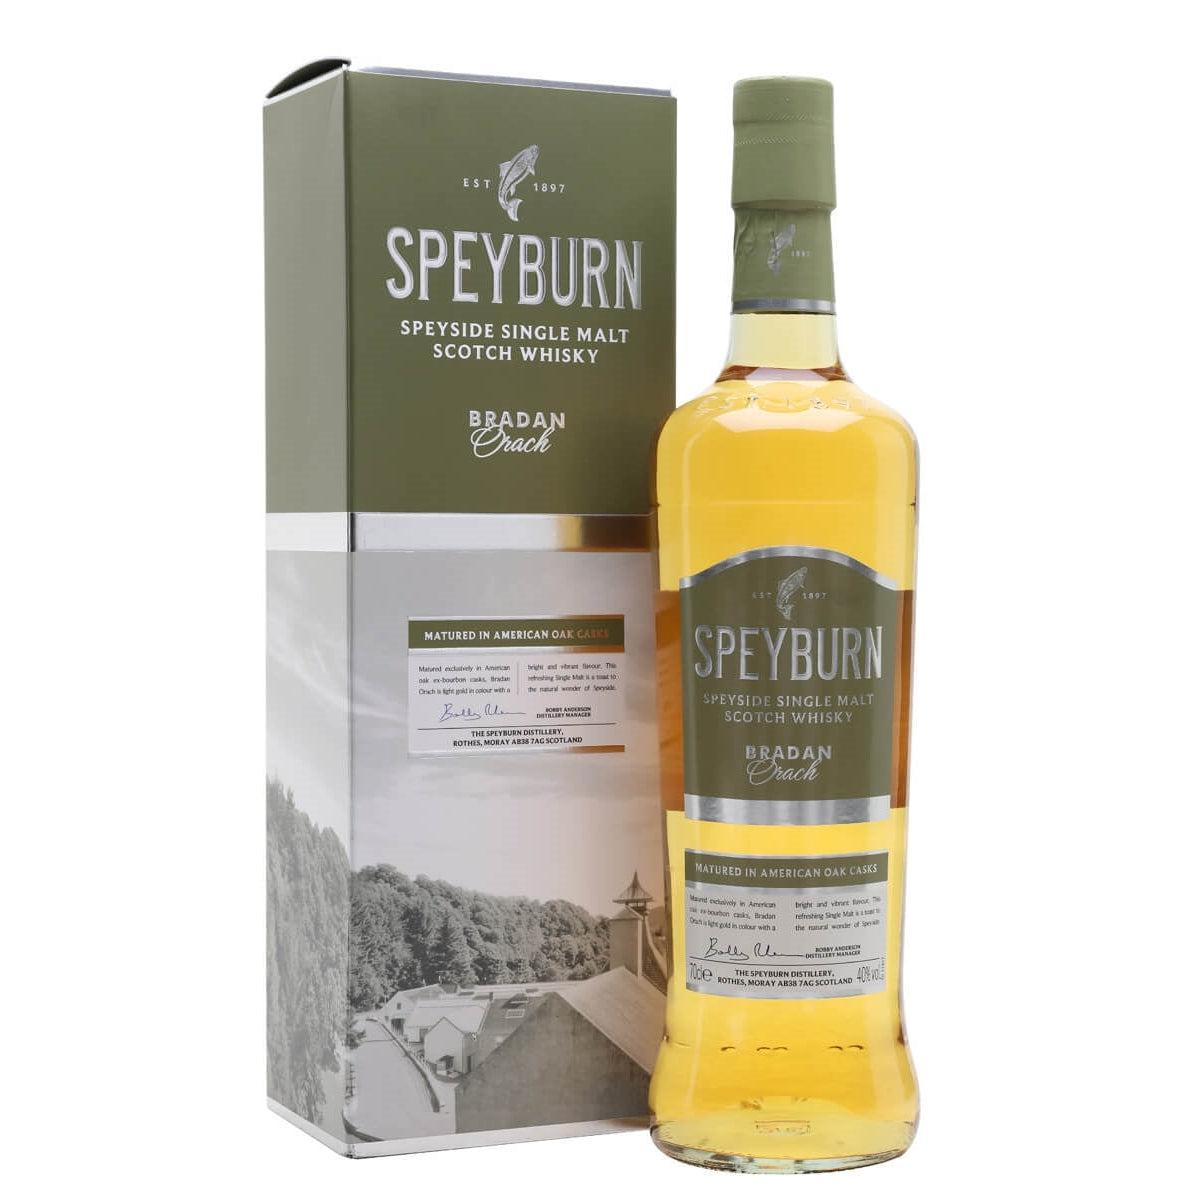 Speyburn Speyside Single Malt Scotch Whiskey Bradan Orach